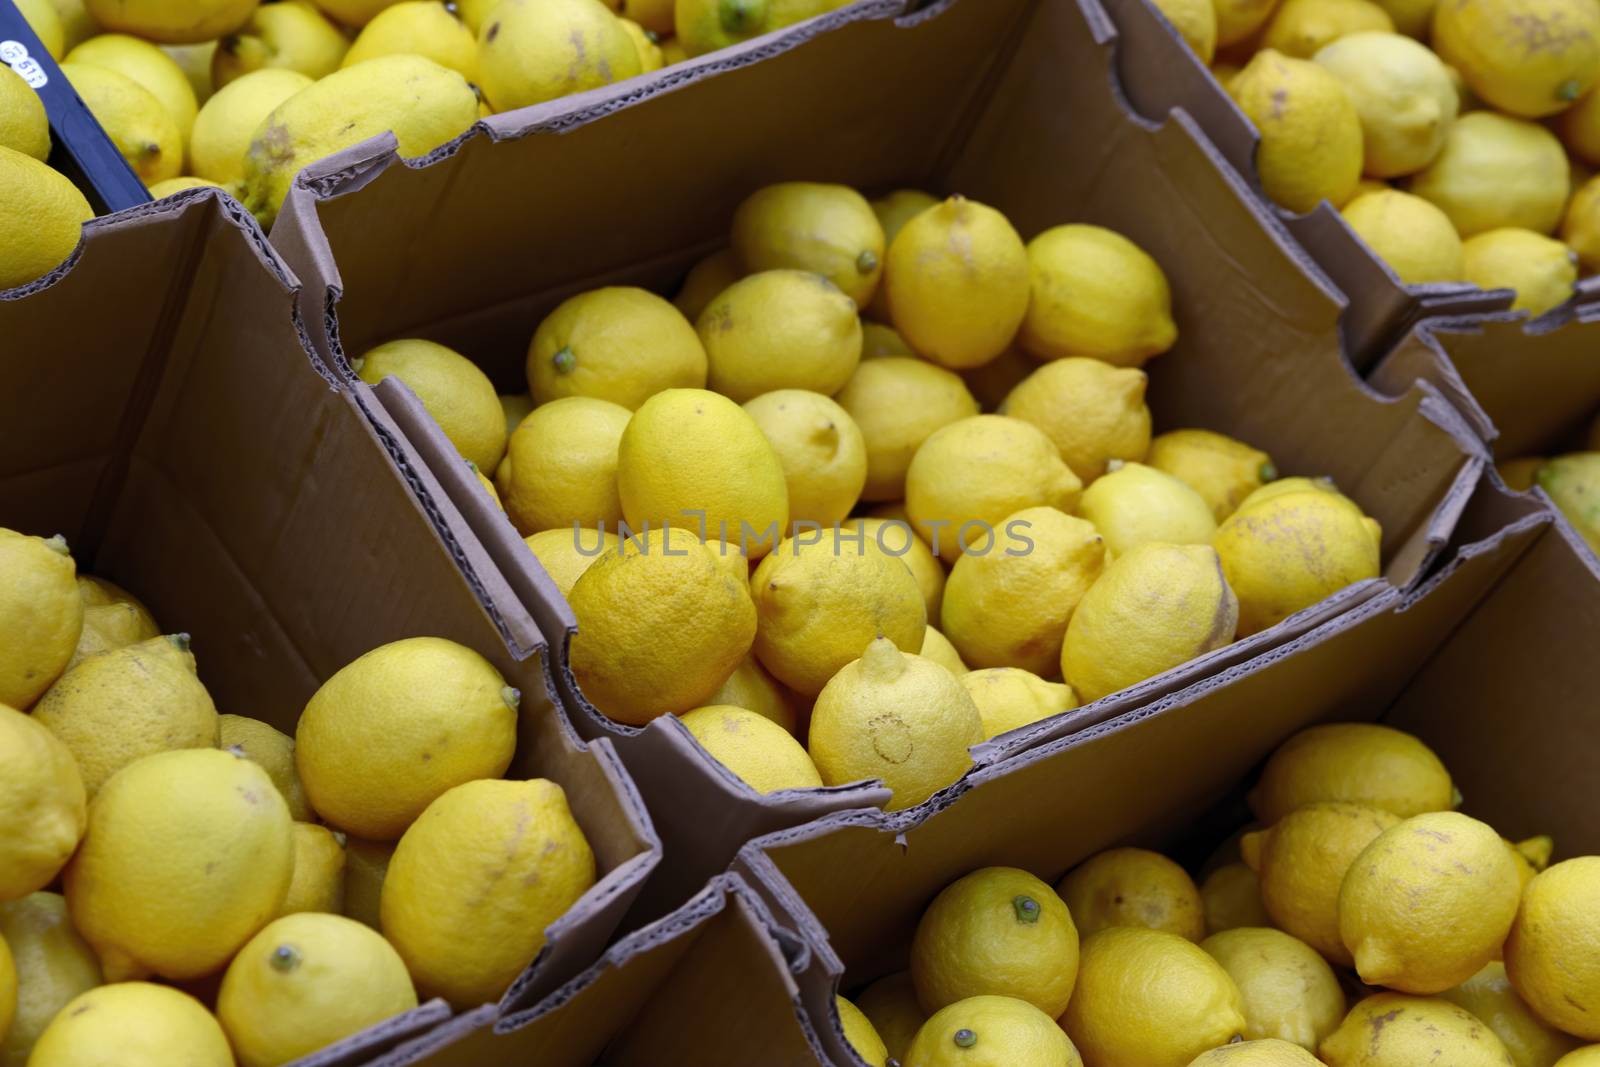 Colorful Display Of Lemons In Market. Macro Photo Of A Ripe Juicy Lemon Fruit. Texture yellow citrus fruit lemon. Many yellow sour lemons lie on the shelf.